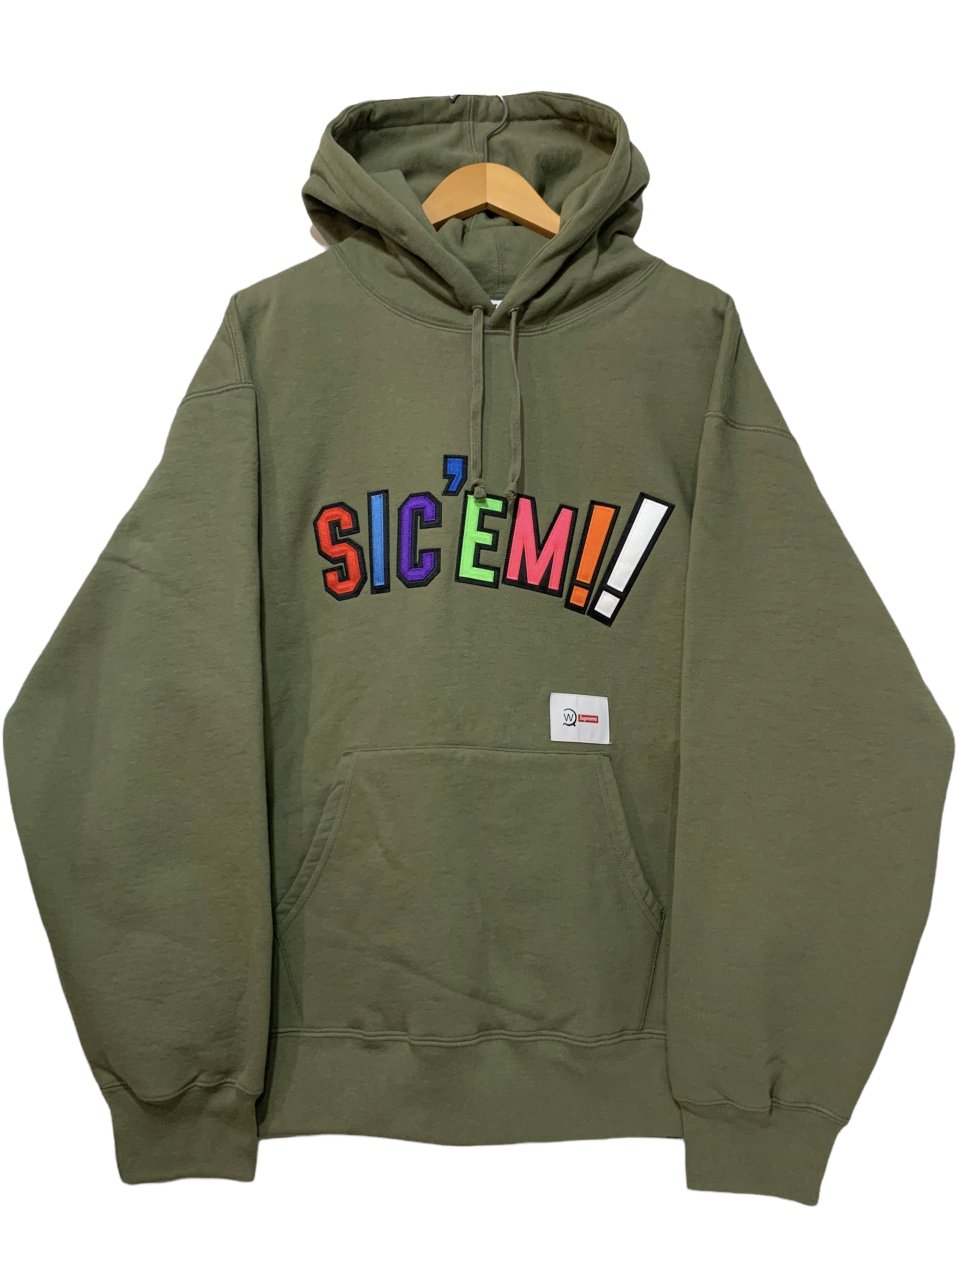 Supreme/WTAPS Sic’em! Hooded Sweatshirt